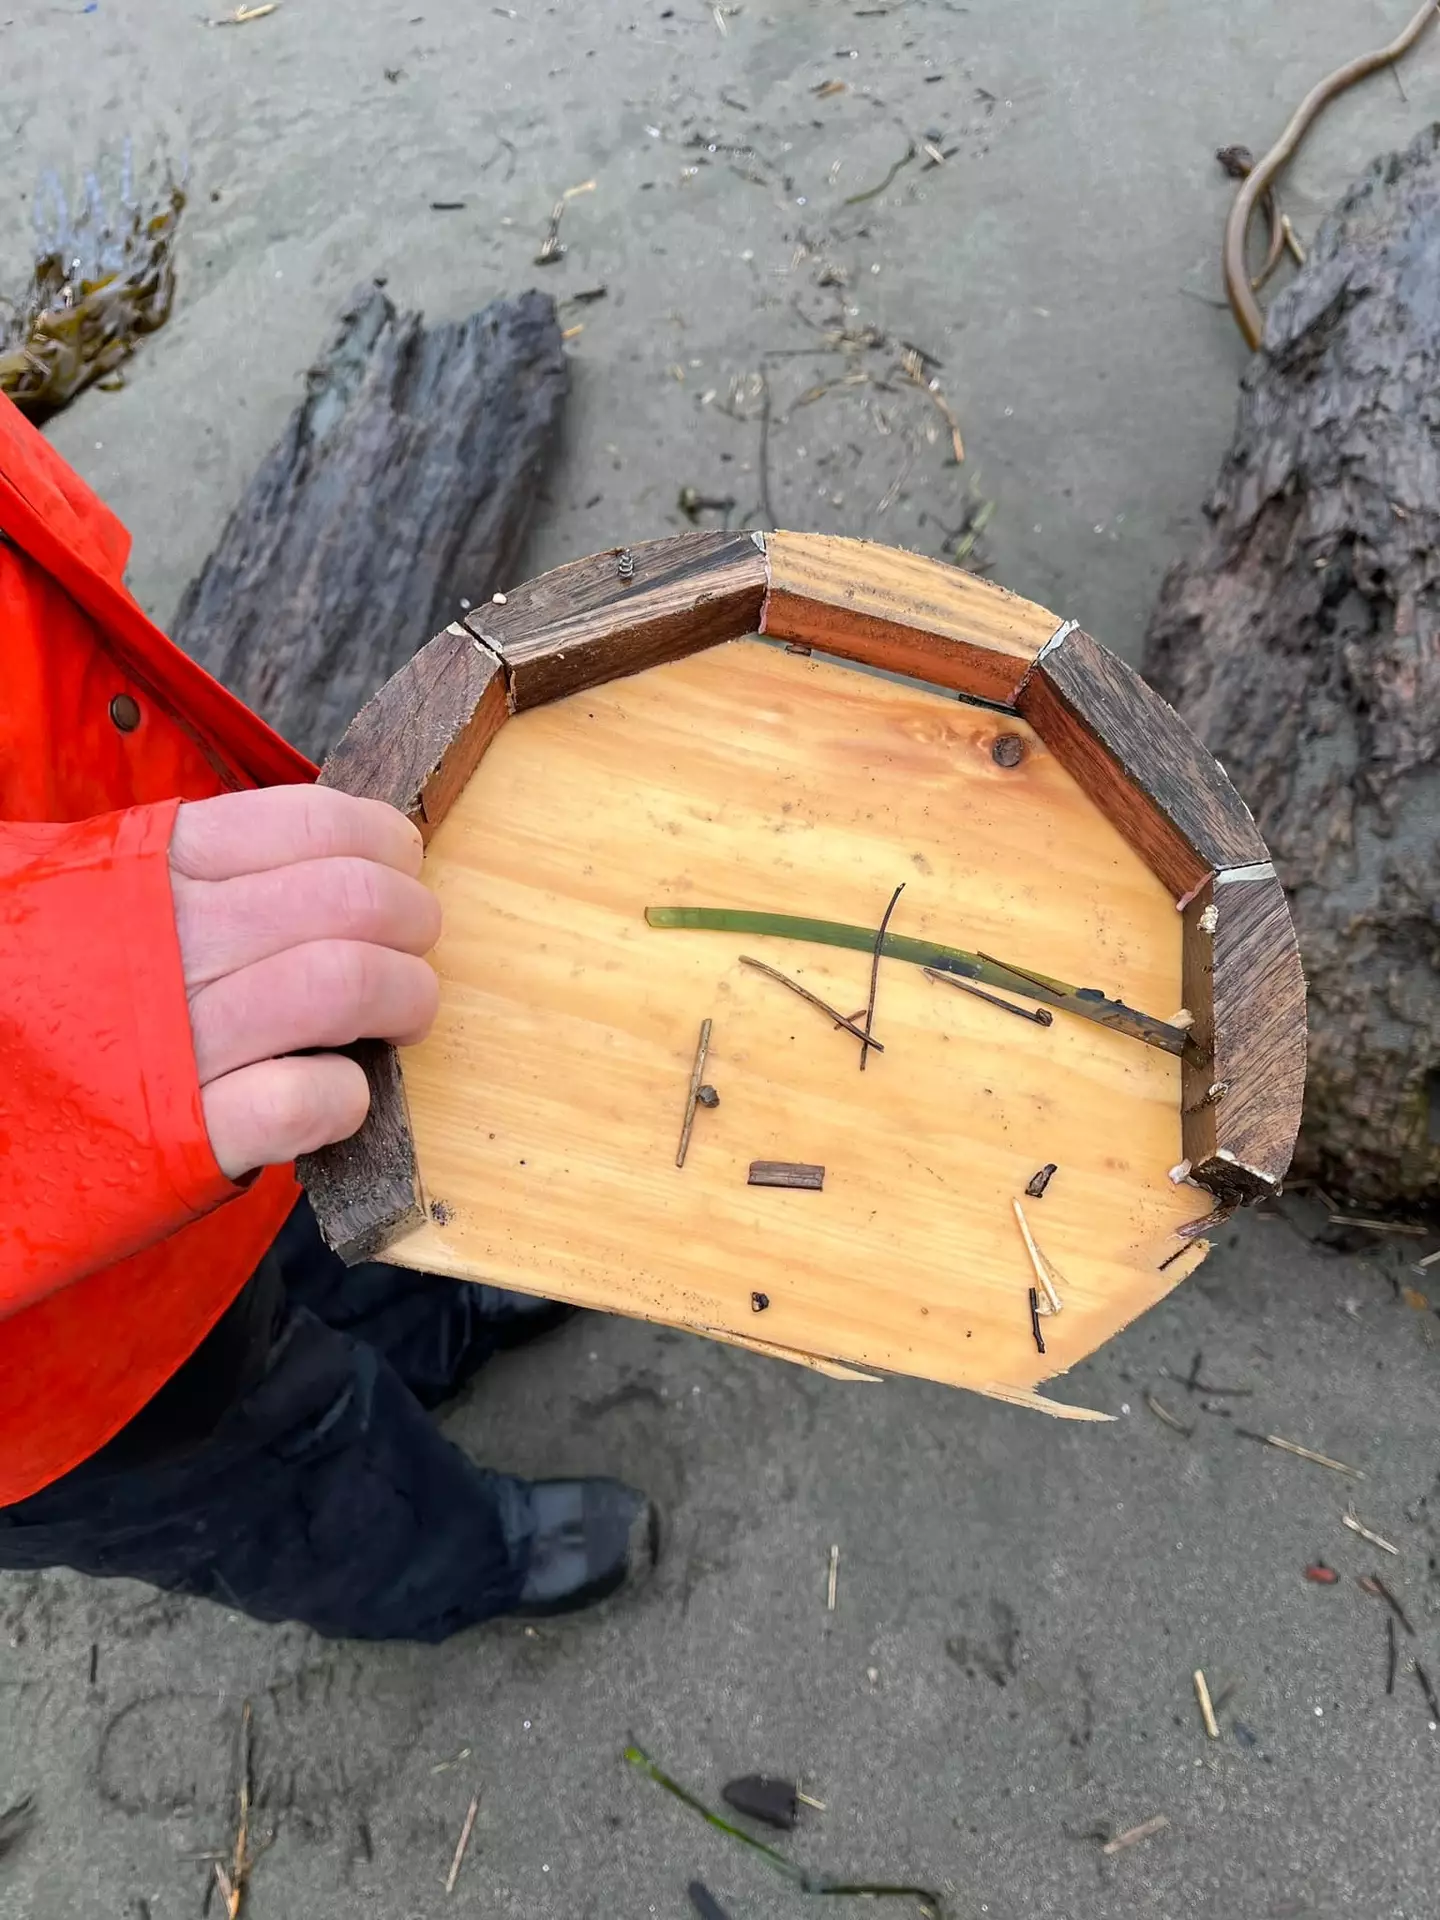 Part of Hunter's 'wooden treasure bucket', found on a beach.